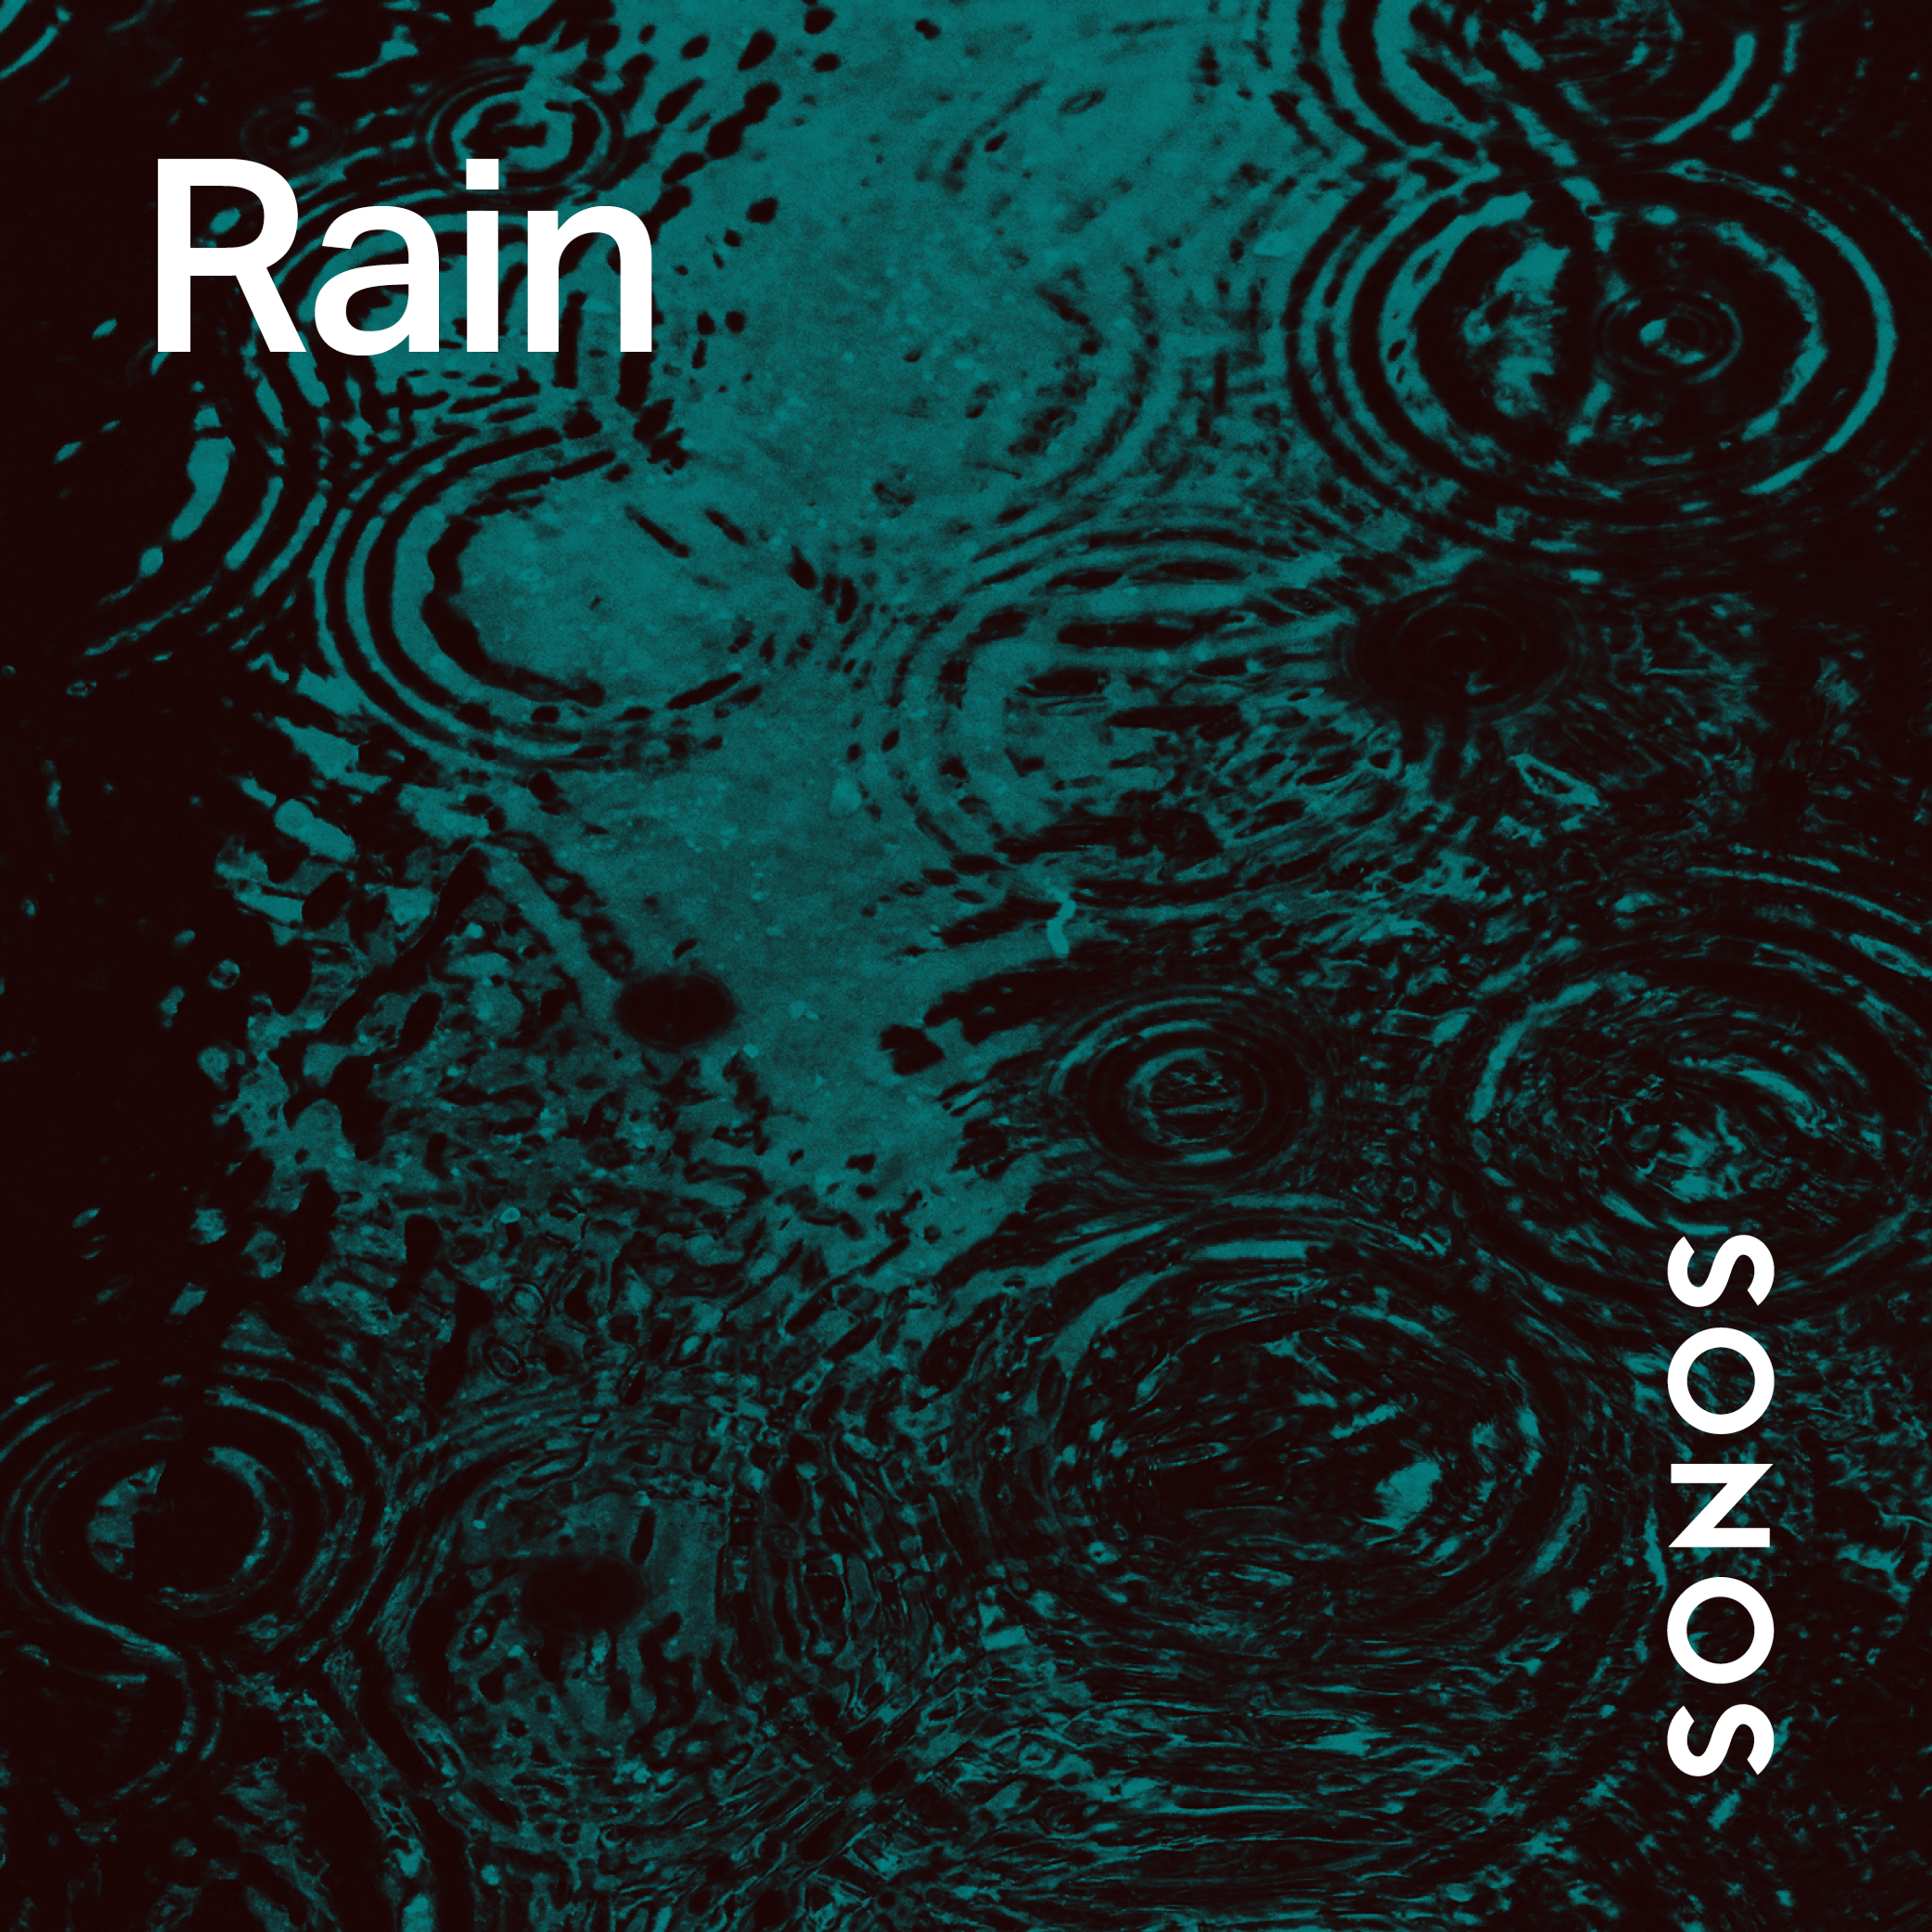 Rain radio station cover